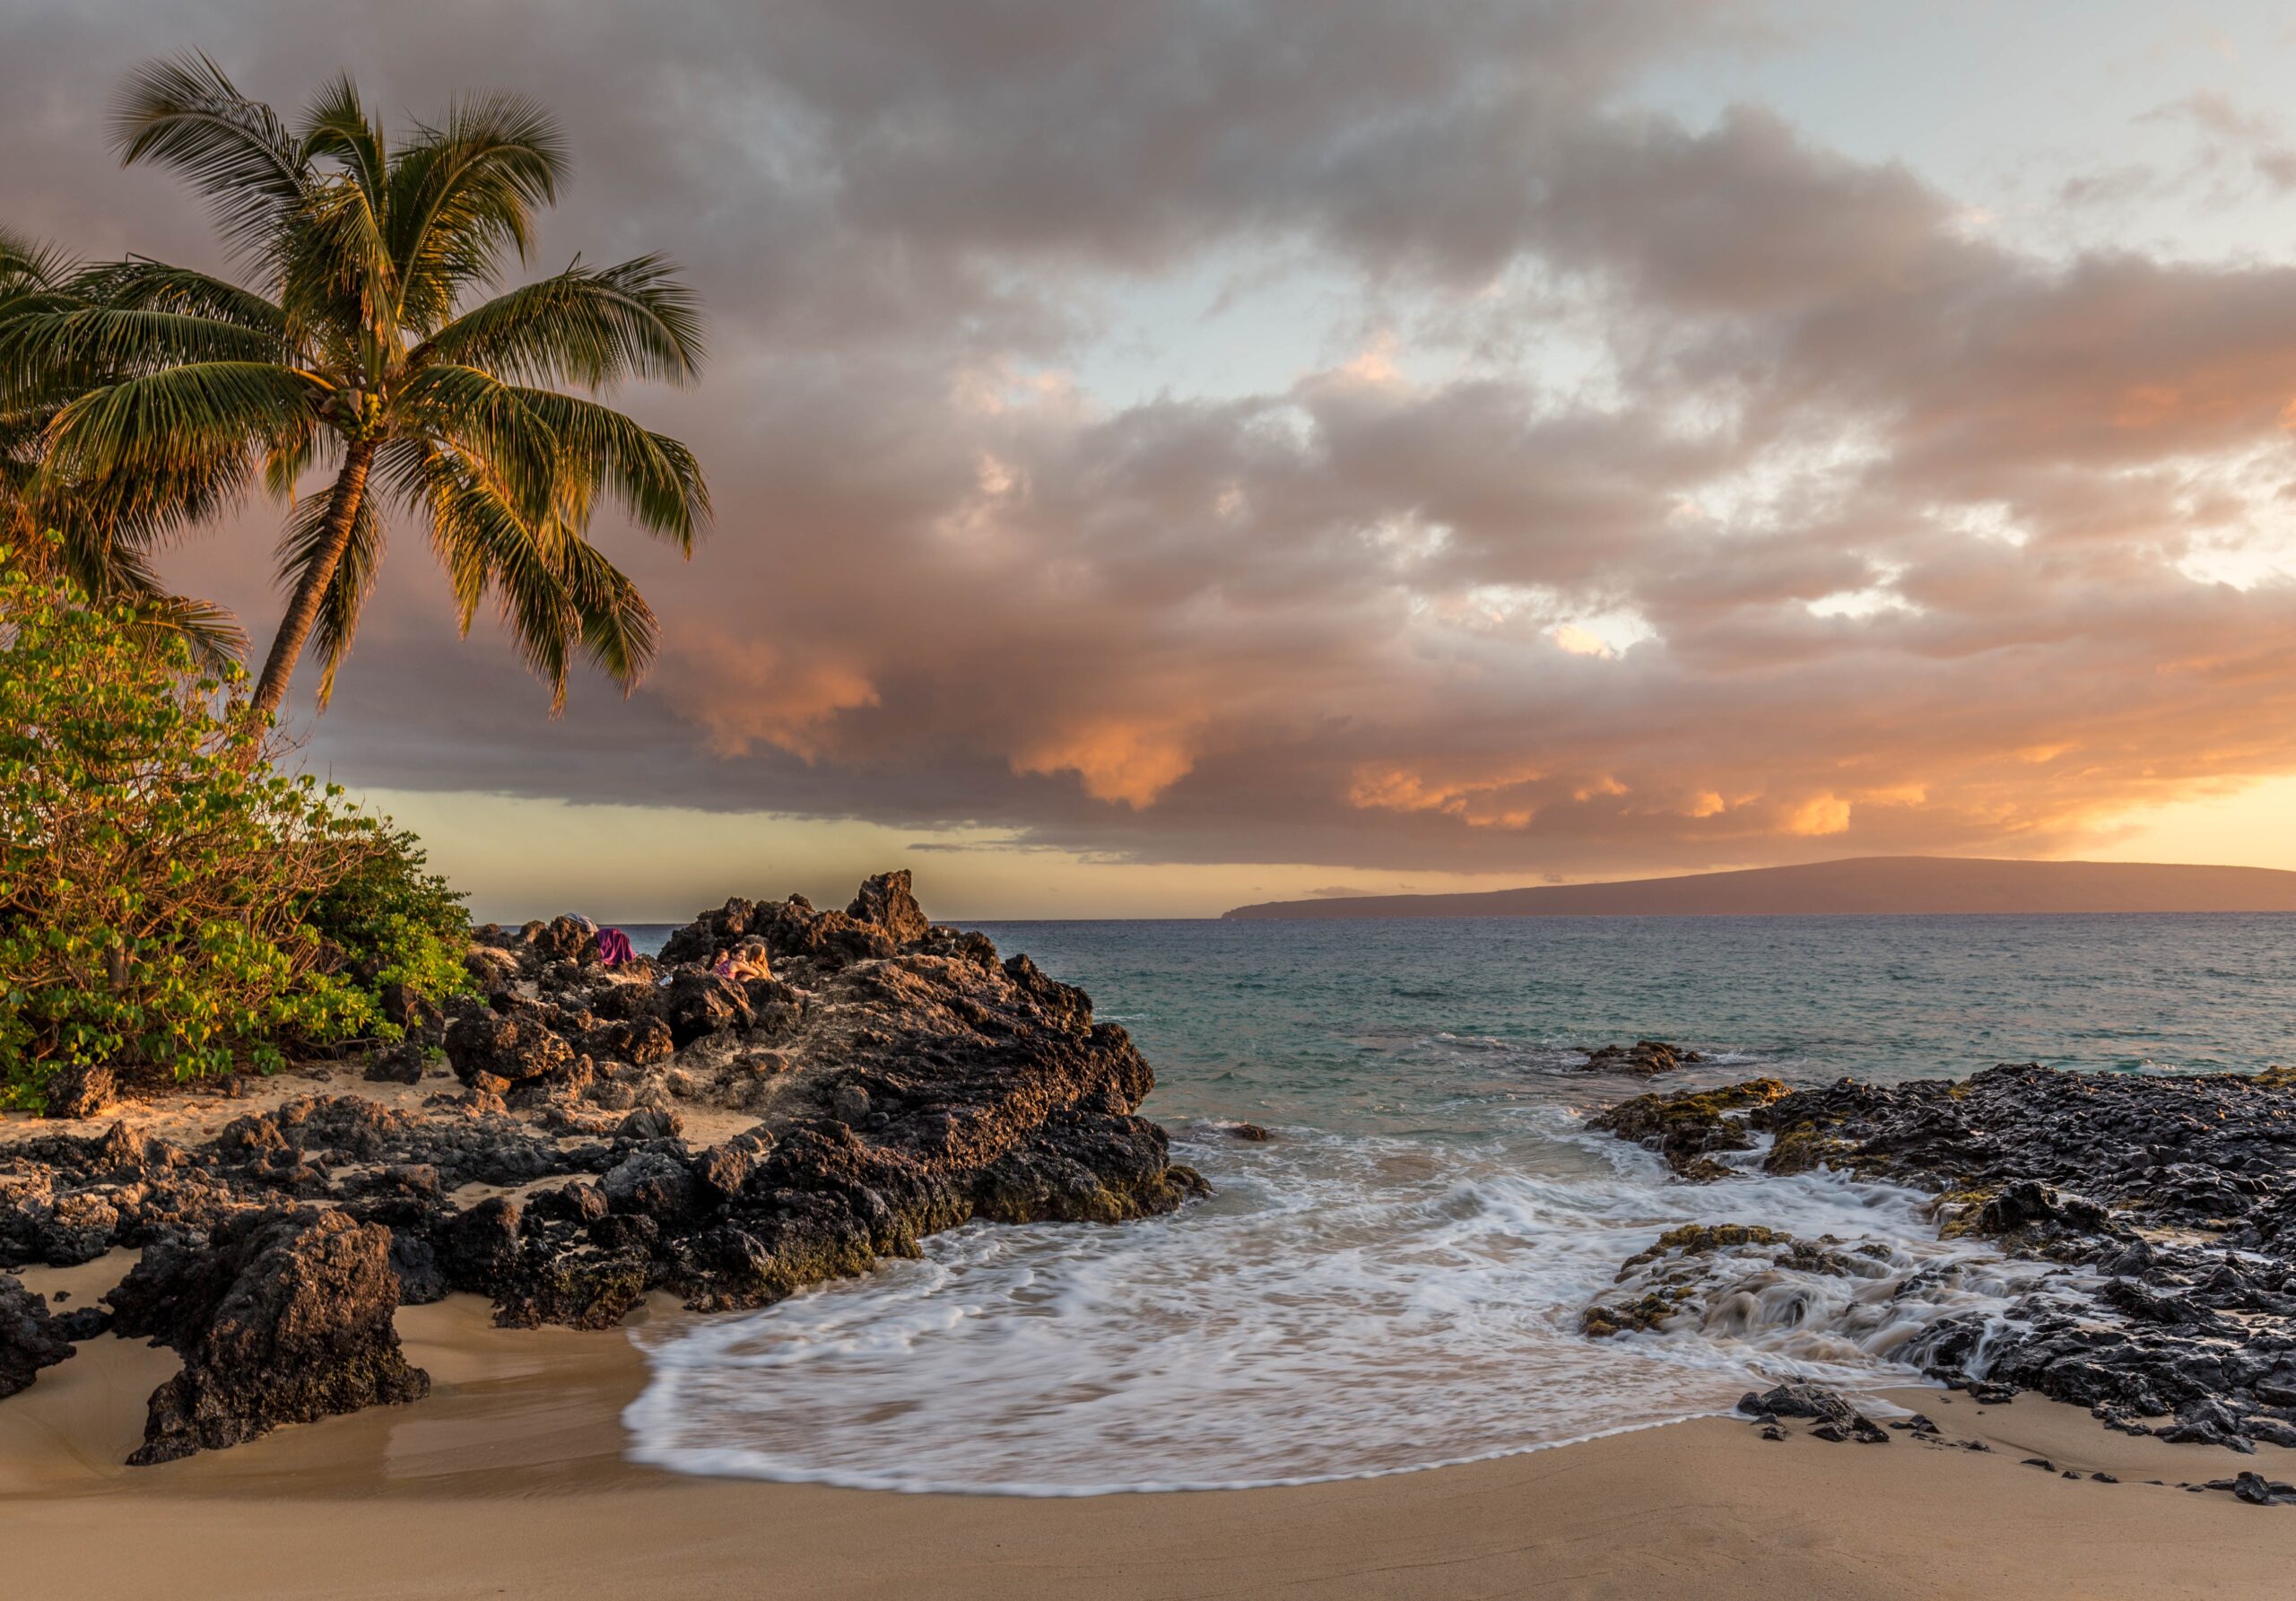 "Waiwai”: Protecting Hawaii’s Wealth of Coastal Resources